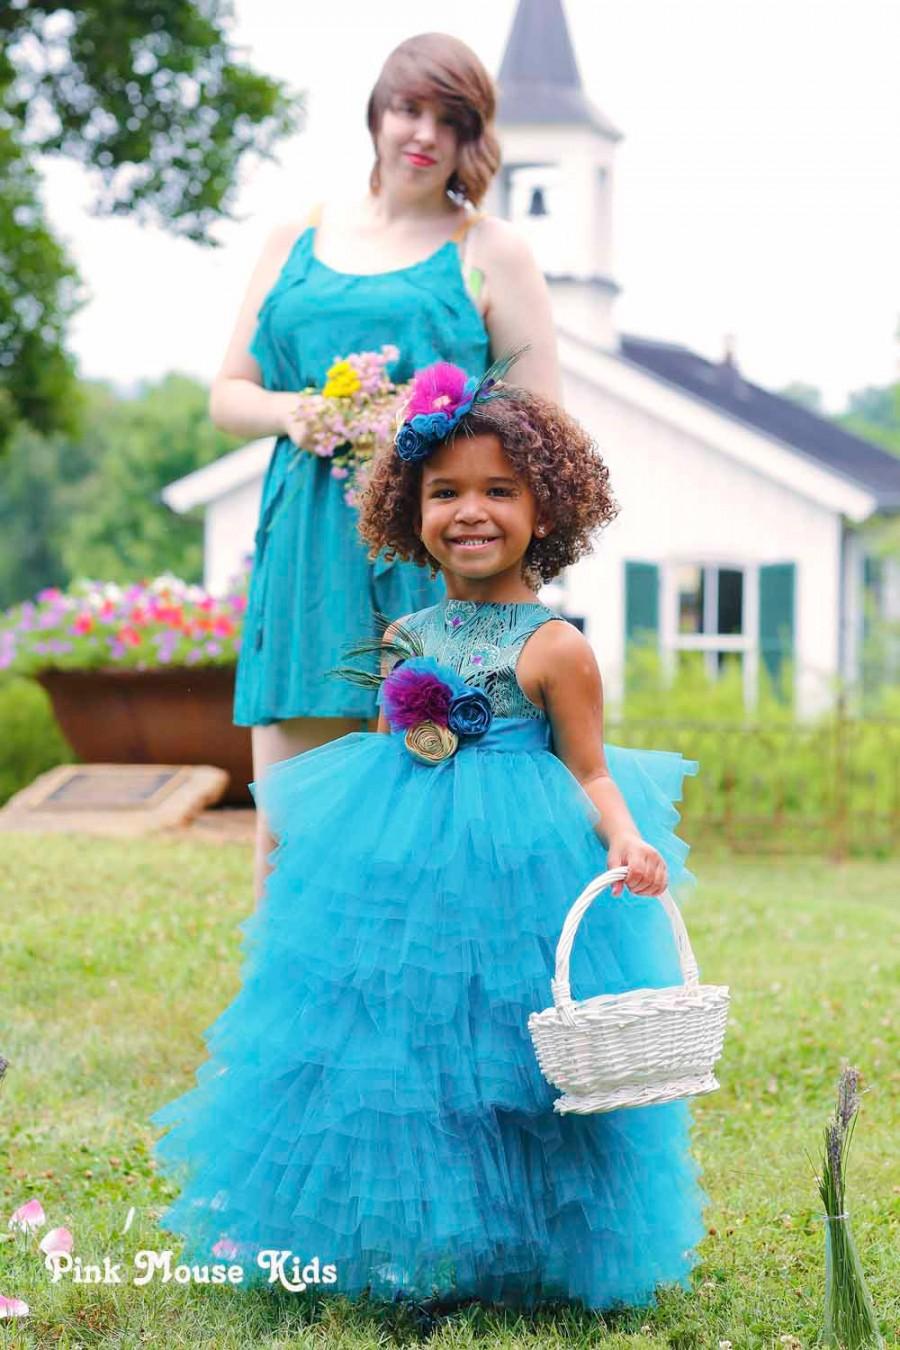 Hochzeit - Peacock Flower Girl Dresses - Boutique Flower Girl Dresses - Custom Made Flower Girl Dresses - Flower Girl Tutu Dress - Sizes 2T to 8 Years